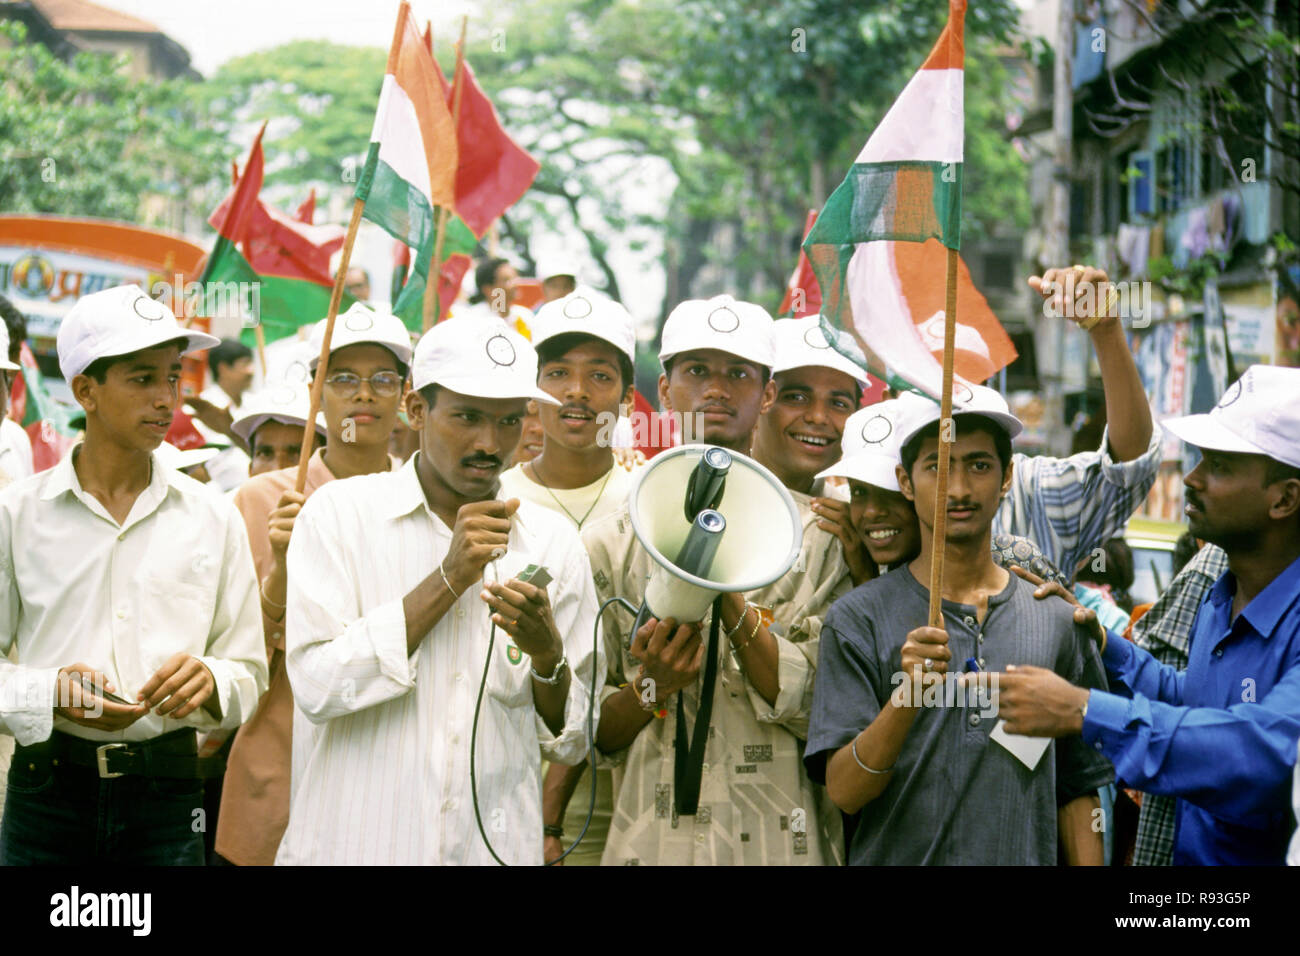 Wahlkampf mit Mikrofonlautsprecher und Parteiflaggen, Bombay, Mumbai, Maharashtra, Indien, Asien, indische Wahlen Stockfoto